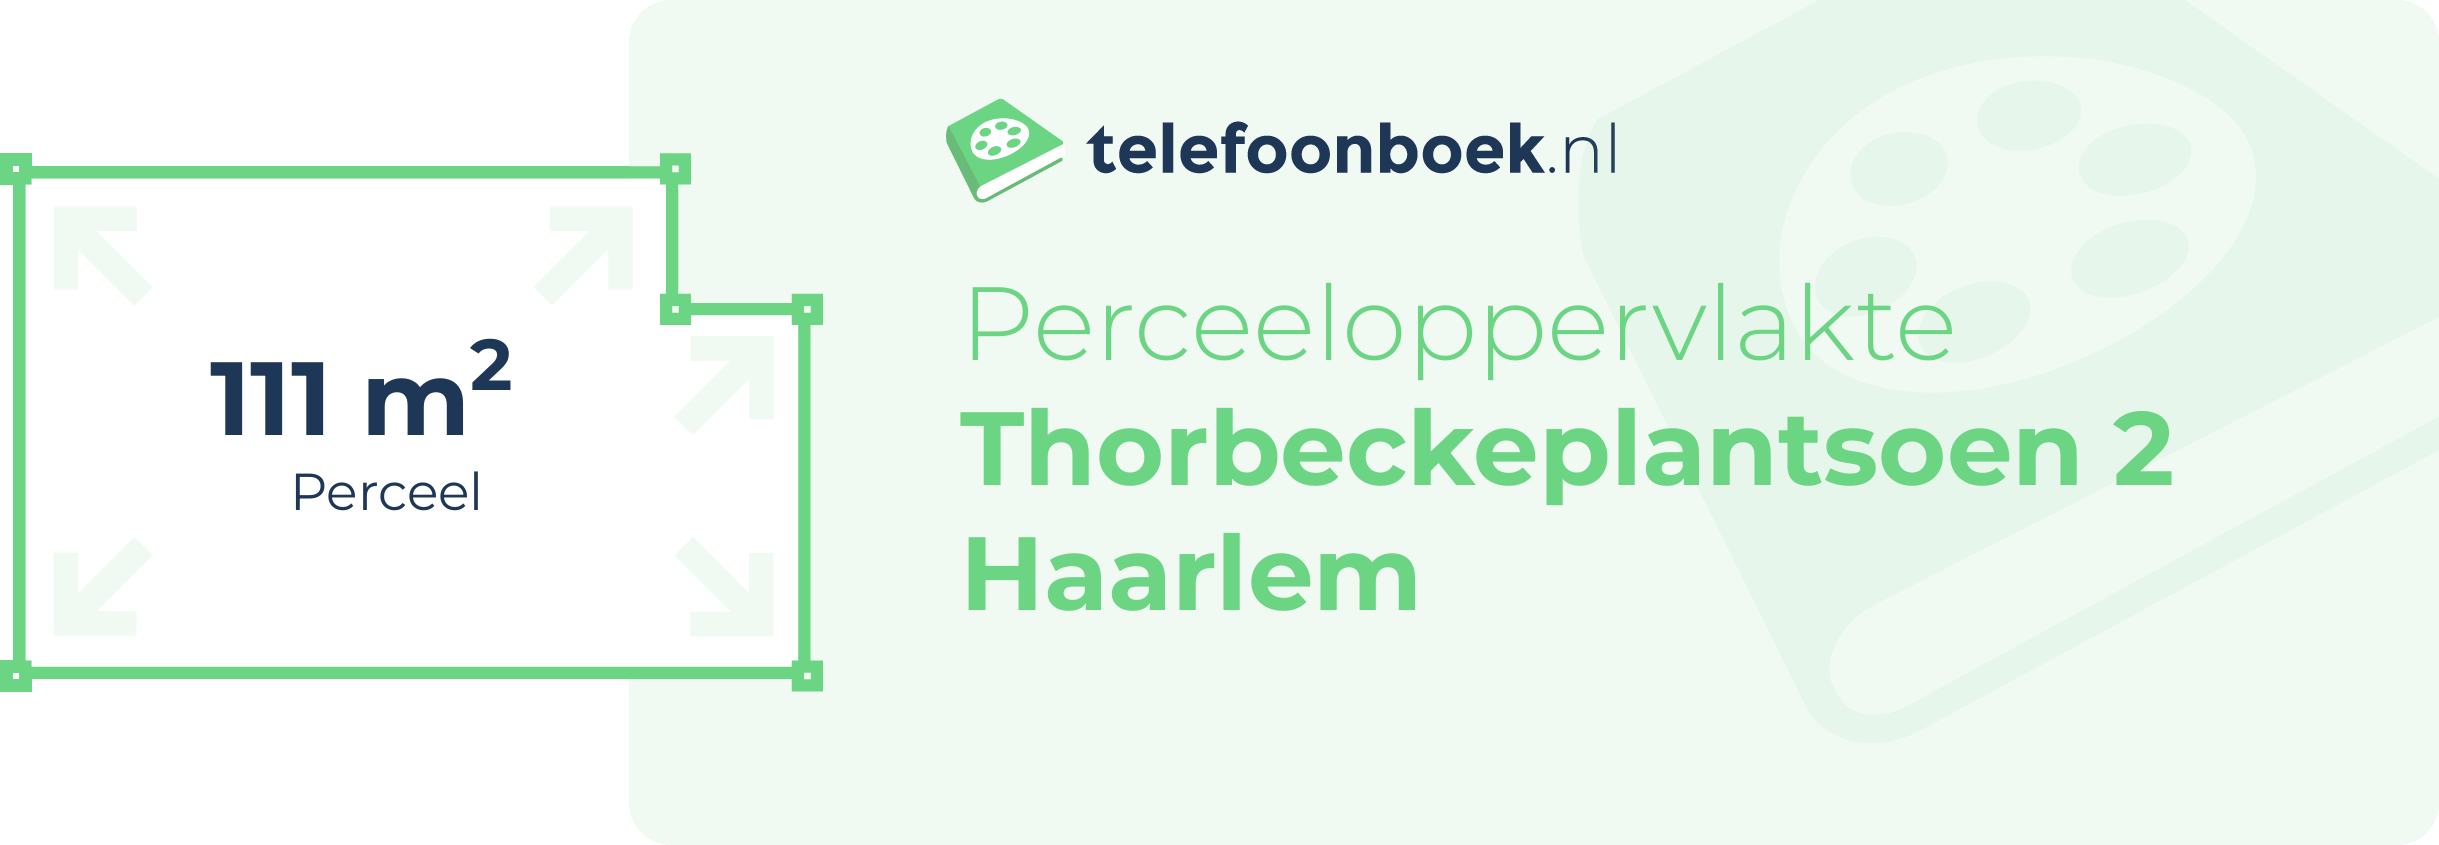 Perceeloppervlakte Thorbeckeplantsoen 2 Haarlem